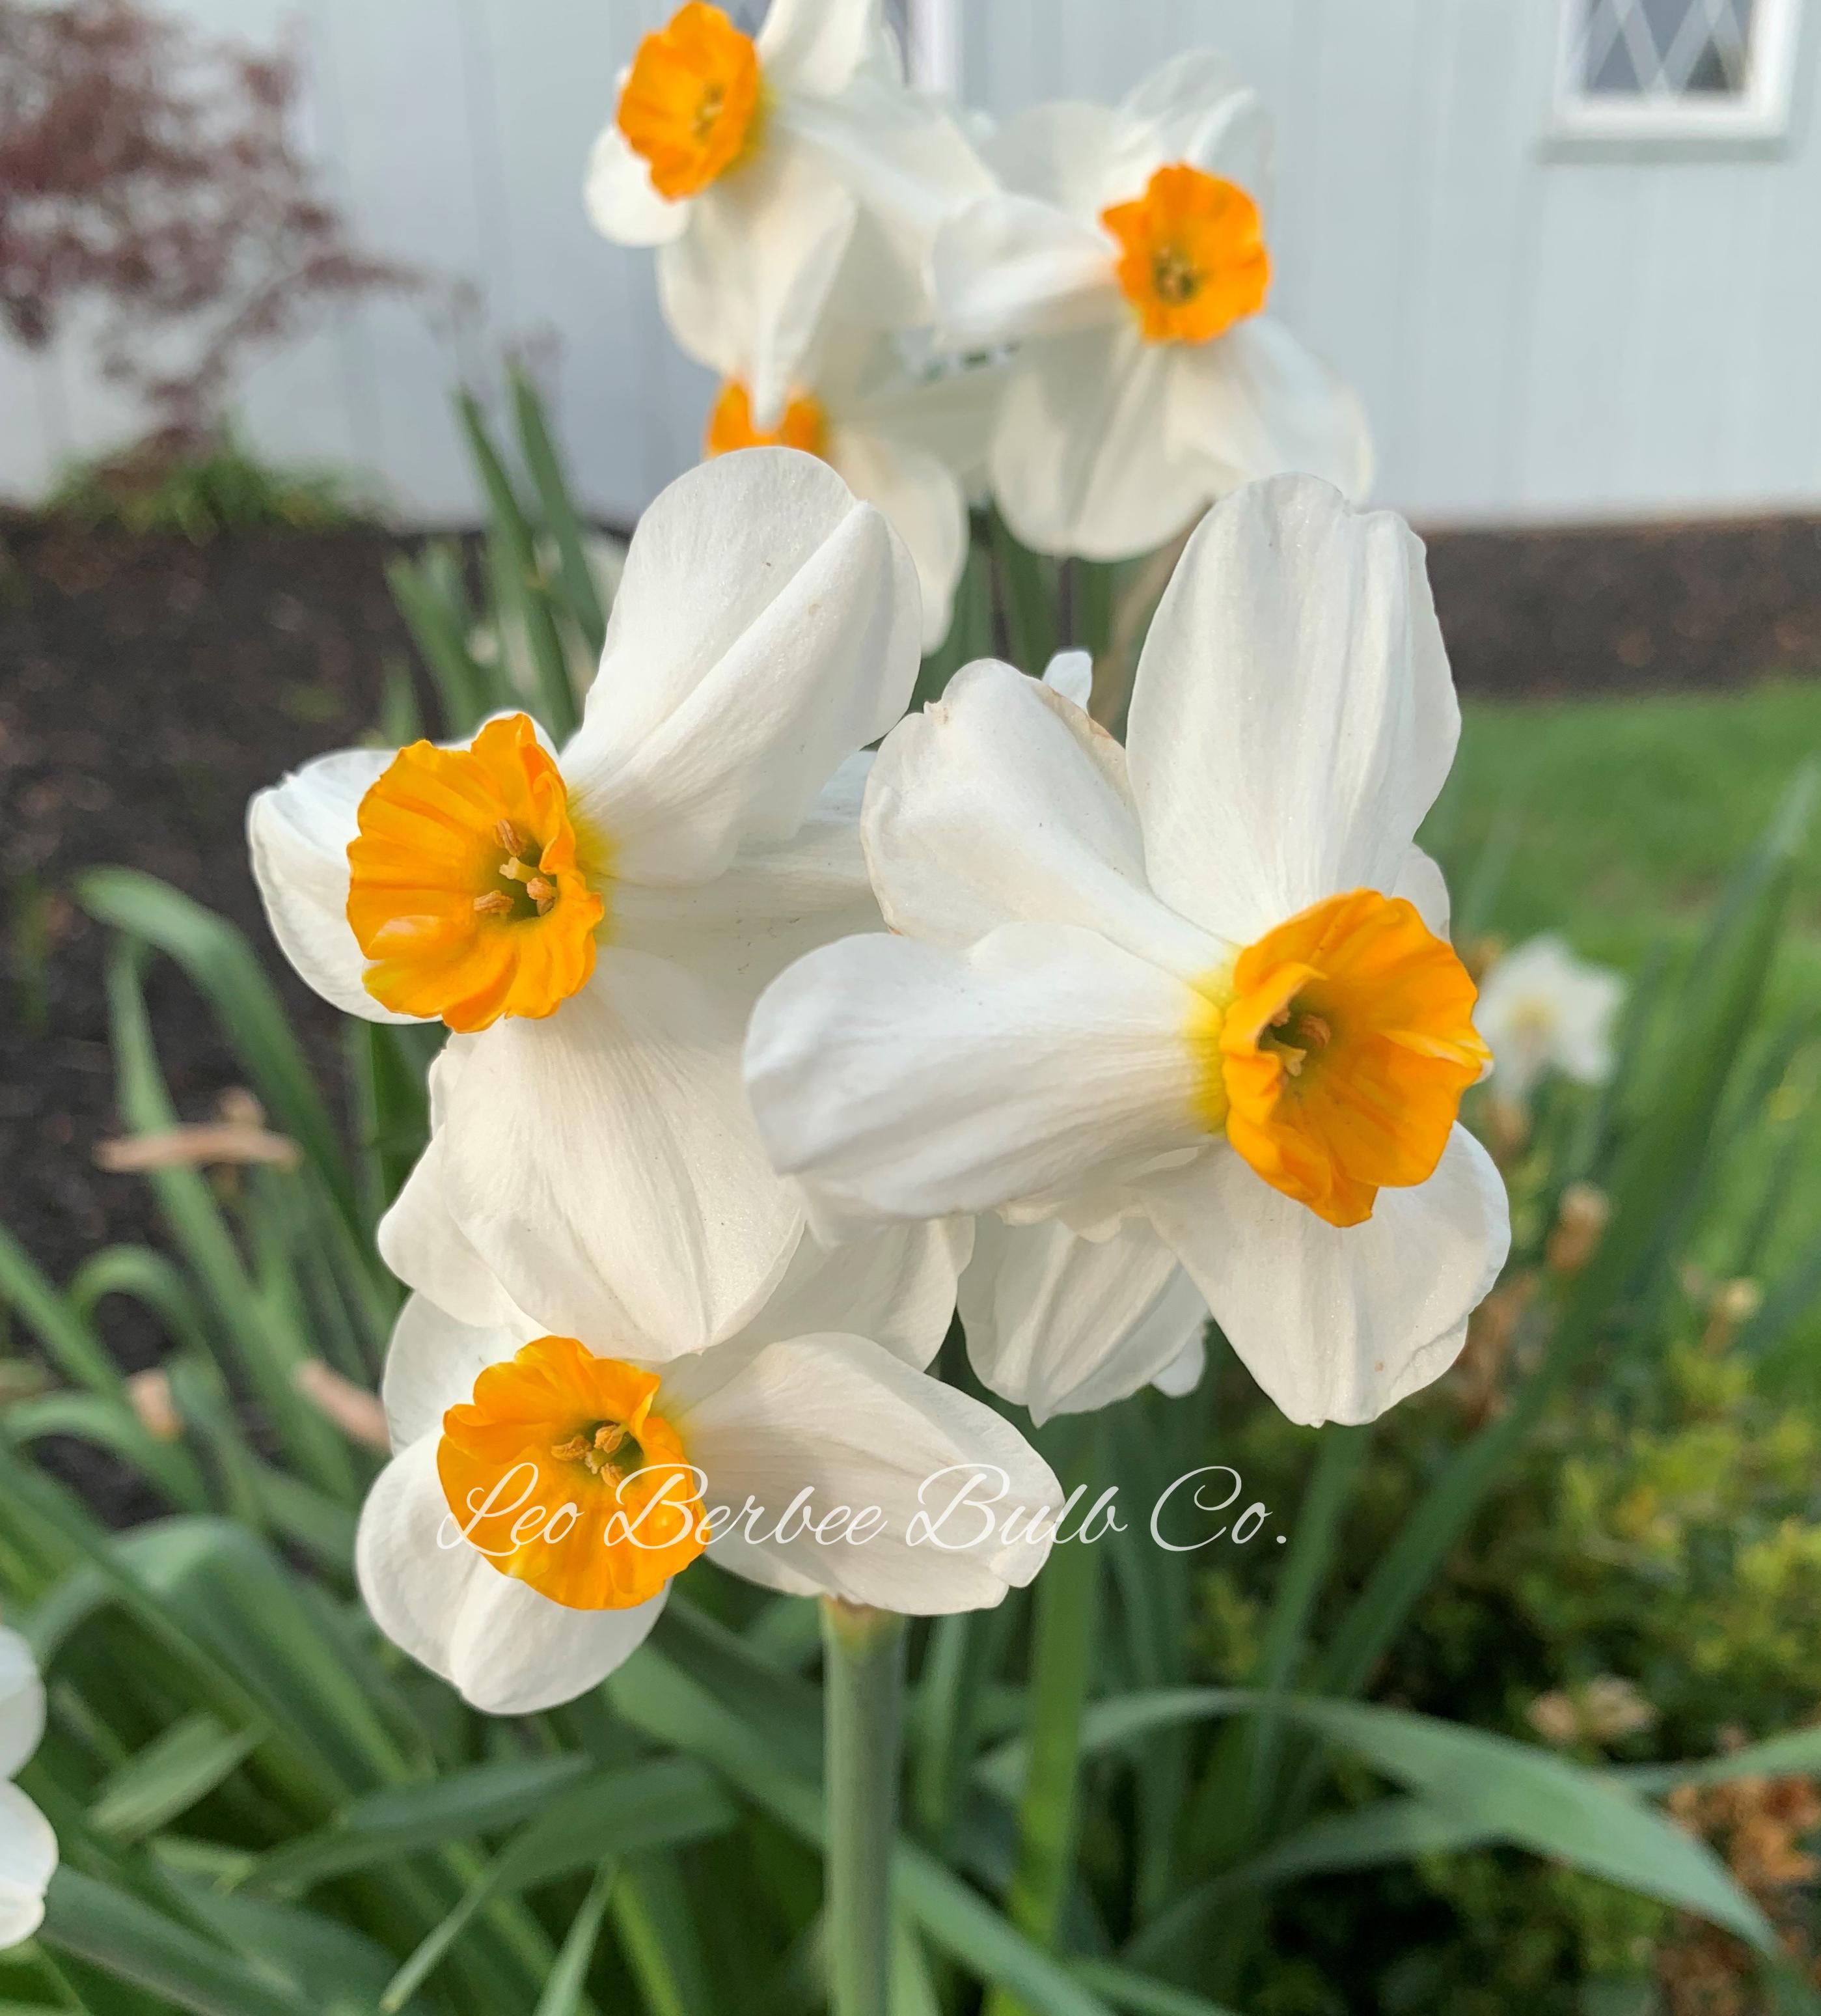 Daffodil Tazetta 'Geranium' - Pre-Order for Fall 2022 from Leo Berbee Bulb Company